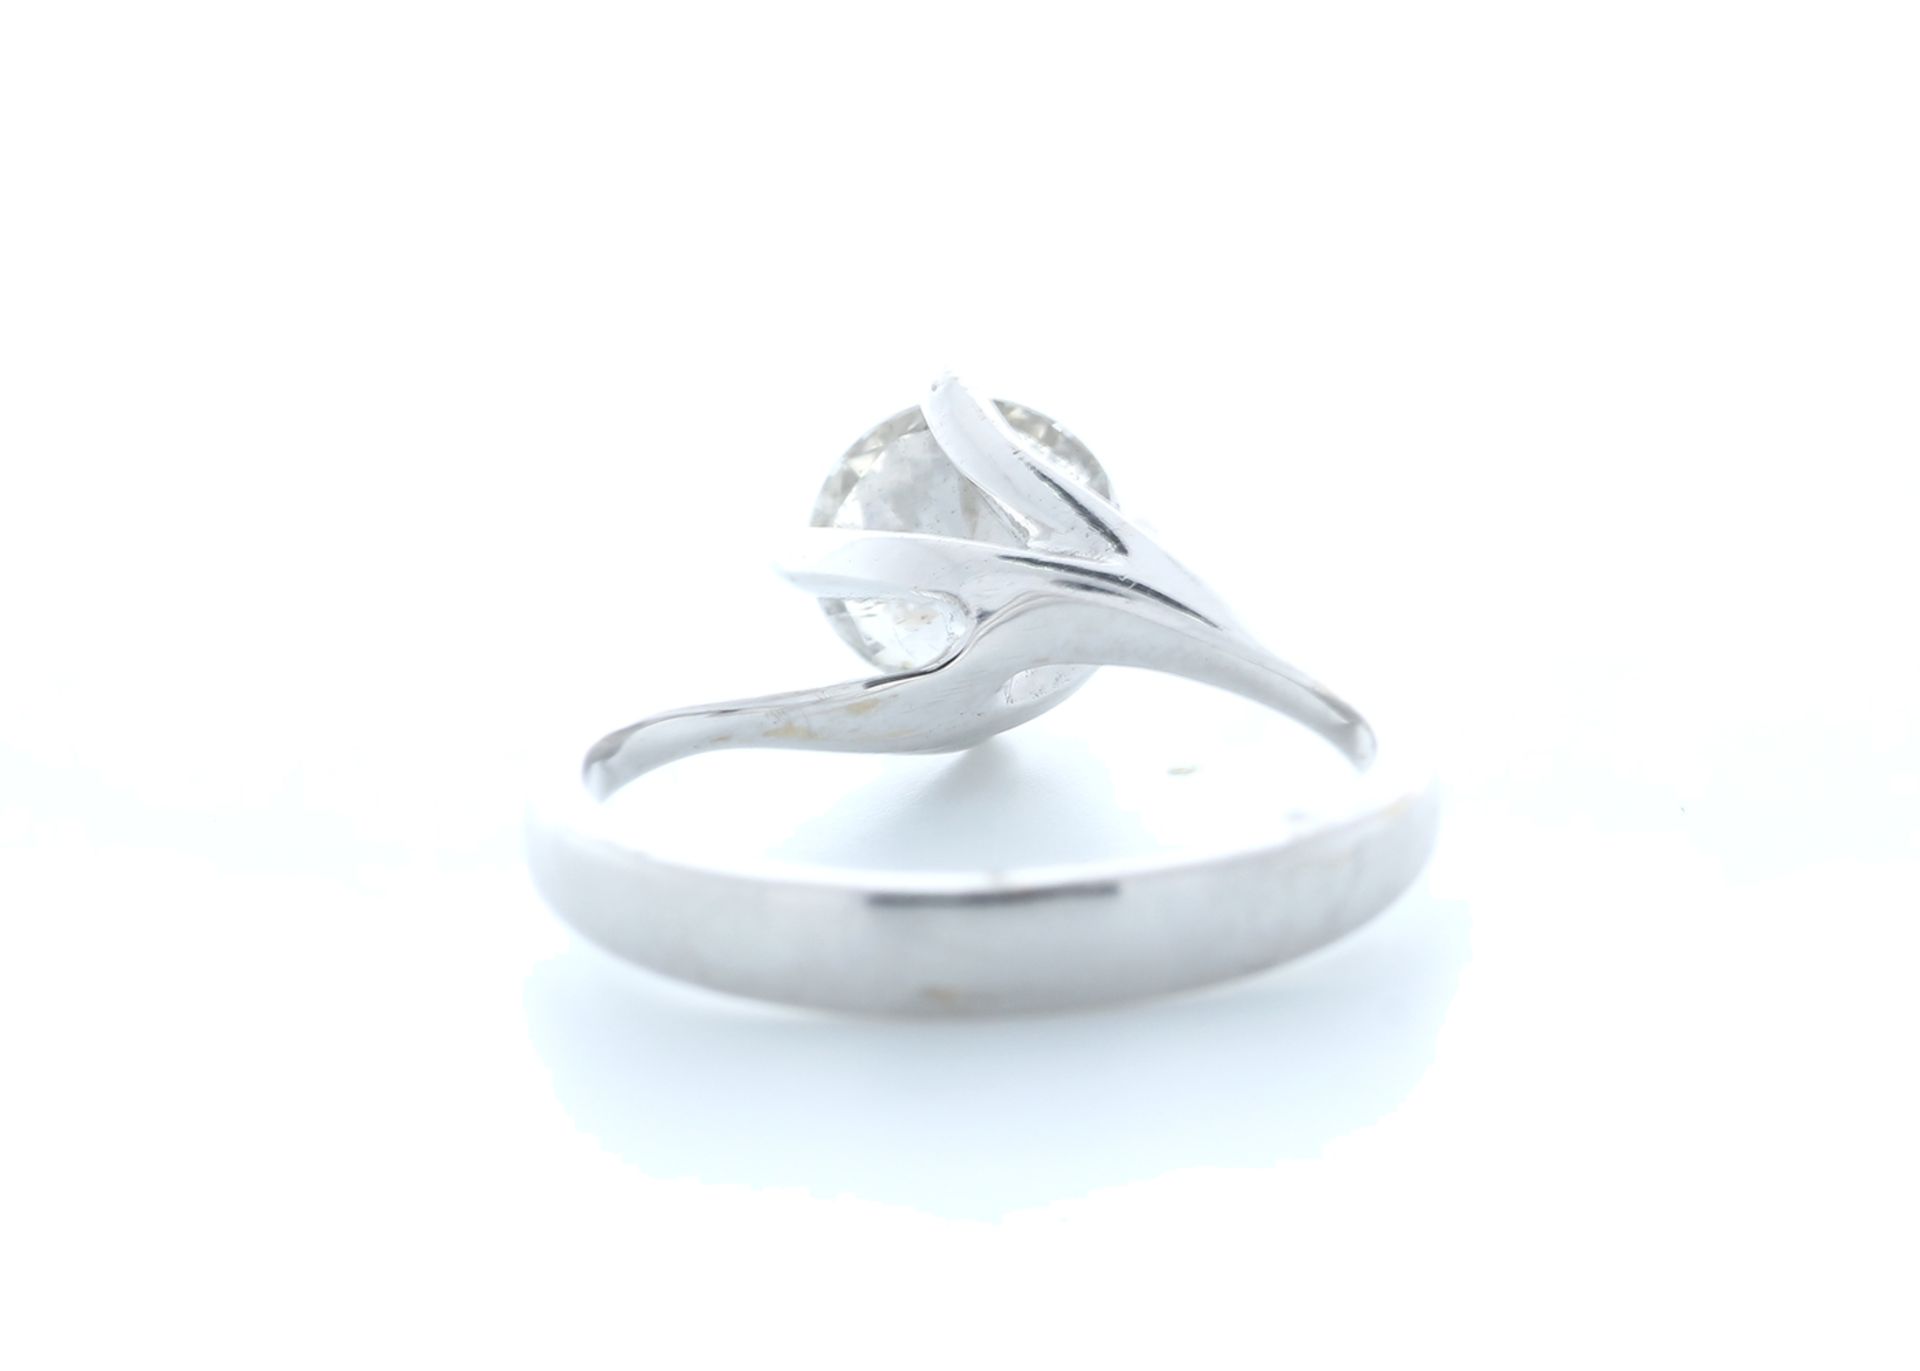 18ct White Gold Single Stone Prong Set Diamond Ring 1.10 Carats - Valued by IDI £12,000.00 - 18ct - Image 3 of 5